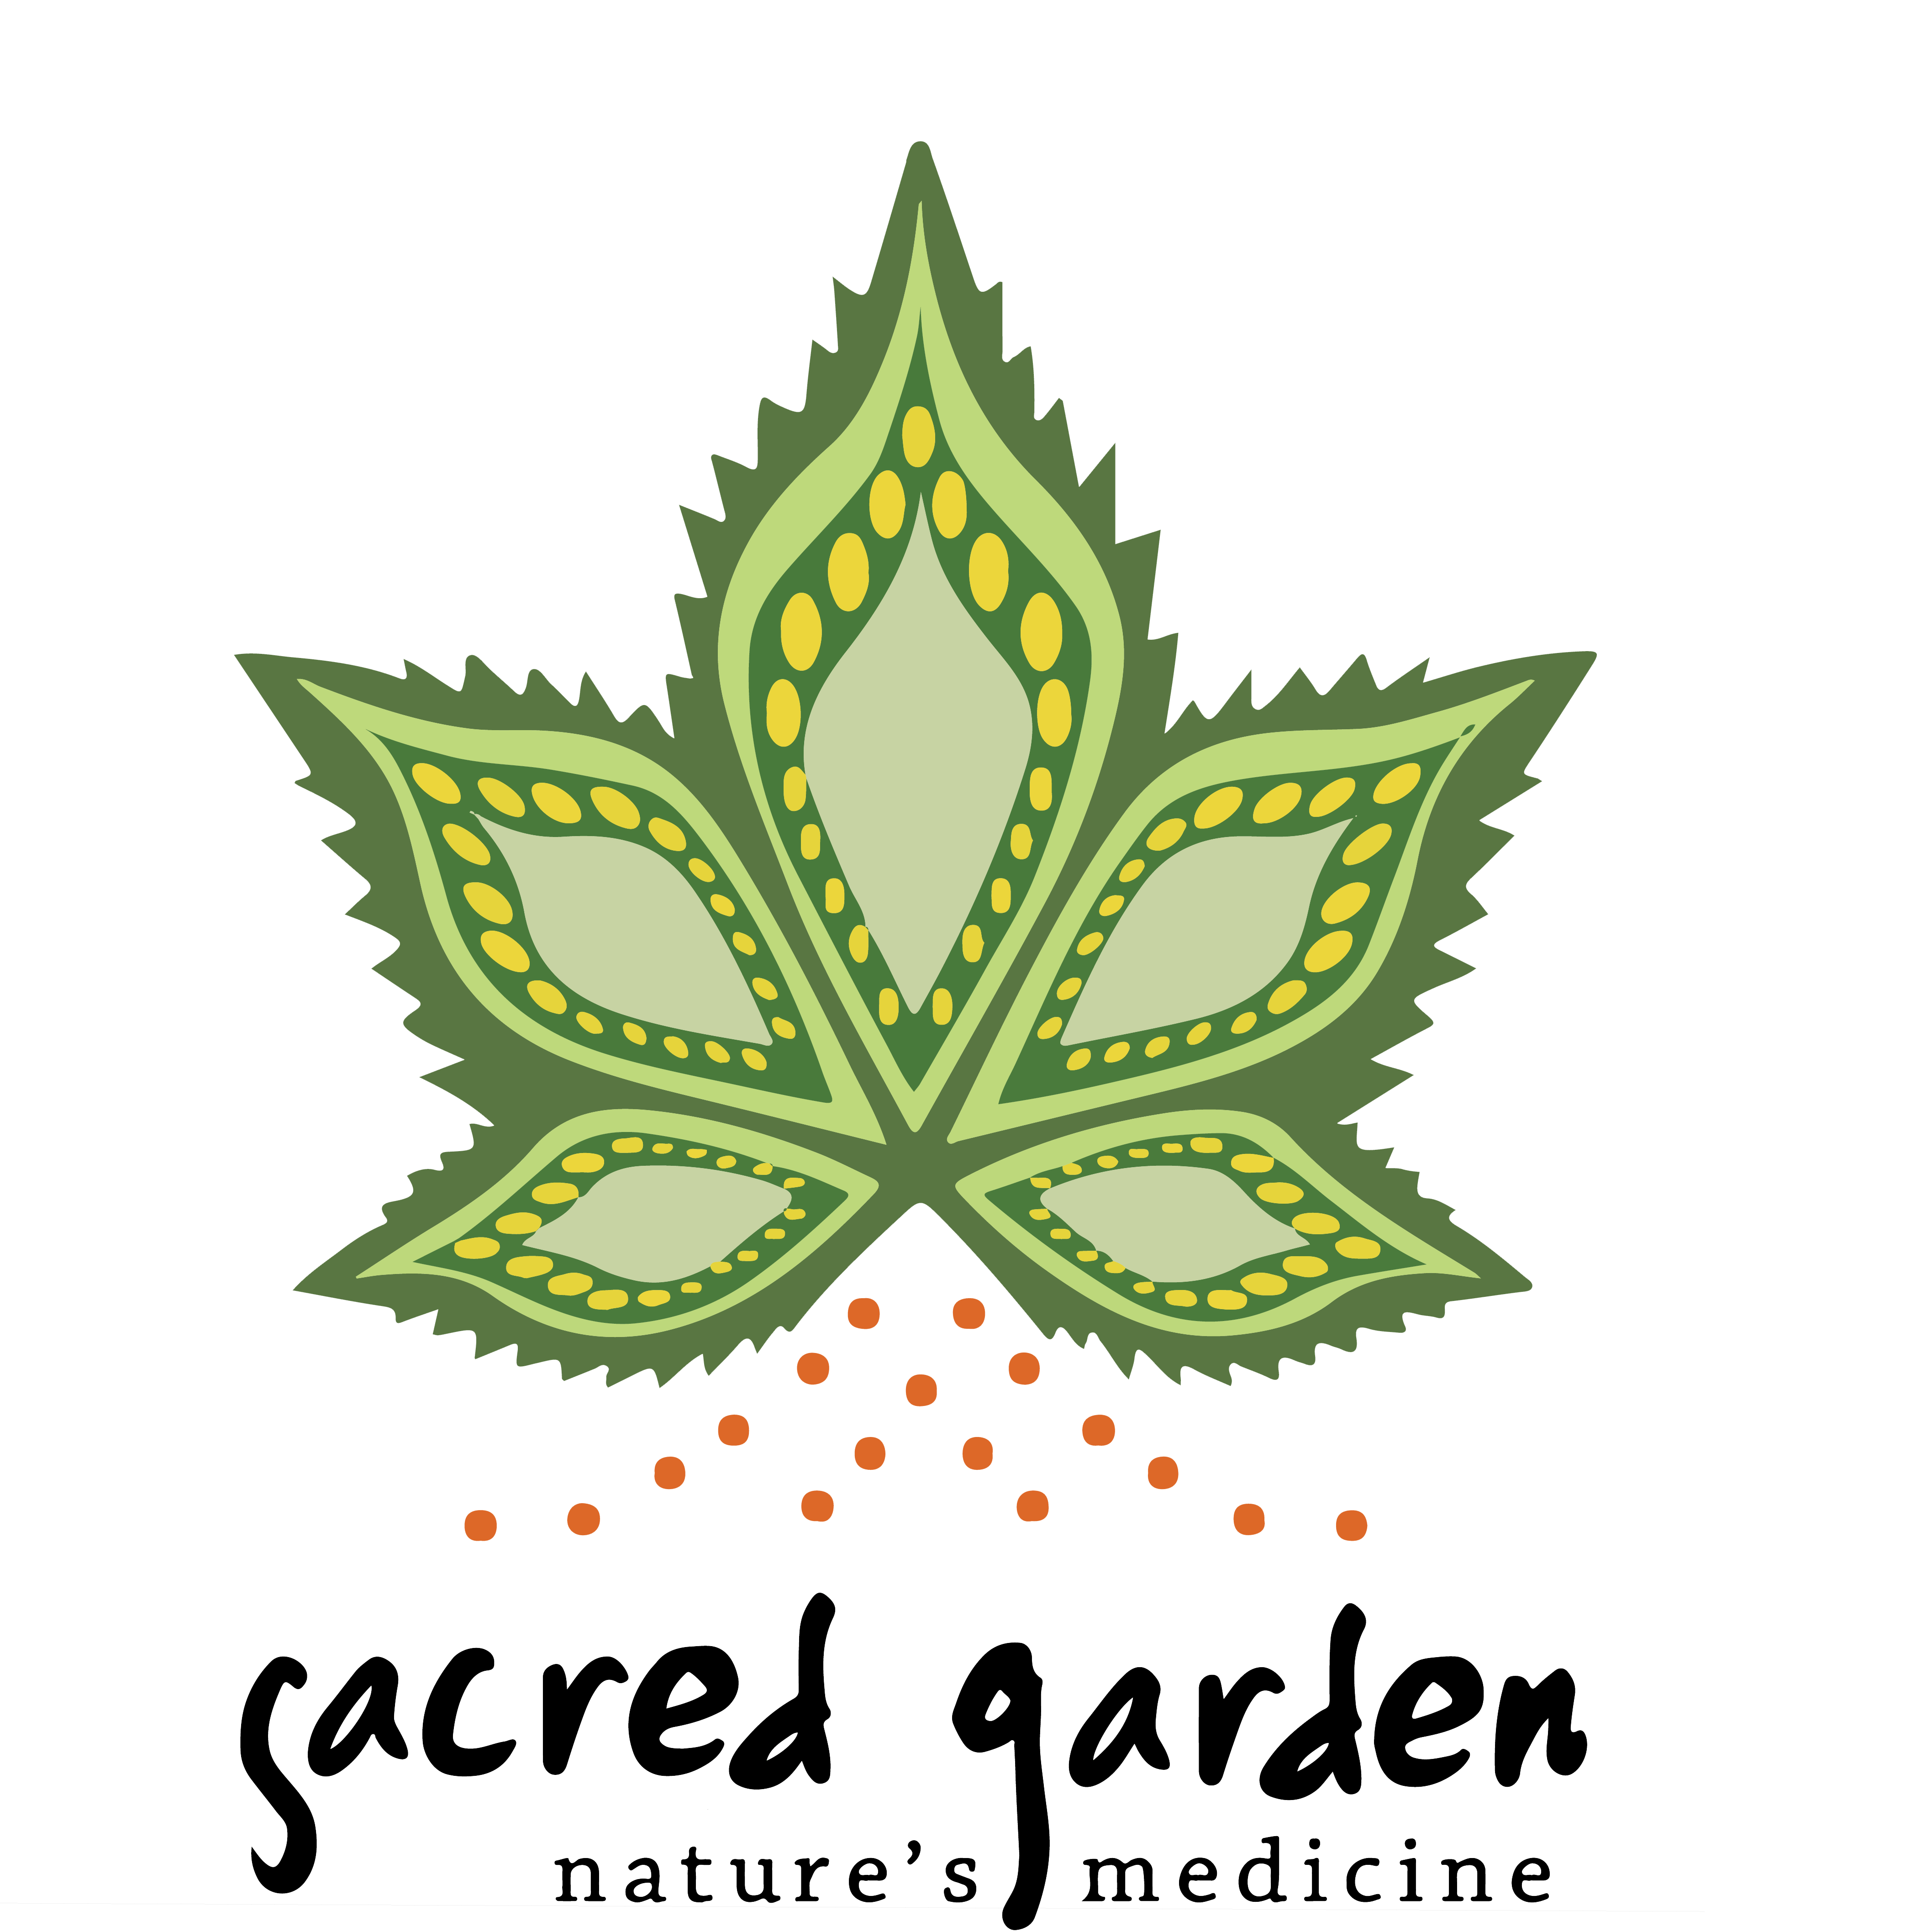 Sacred Garden - Medical Marijuana Doctors - Cannabizme.com